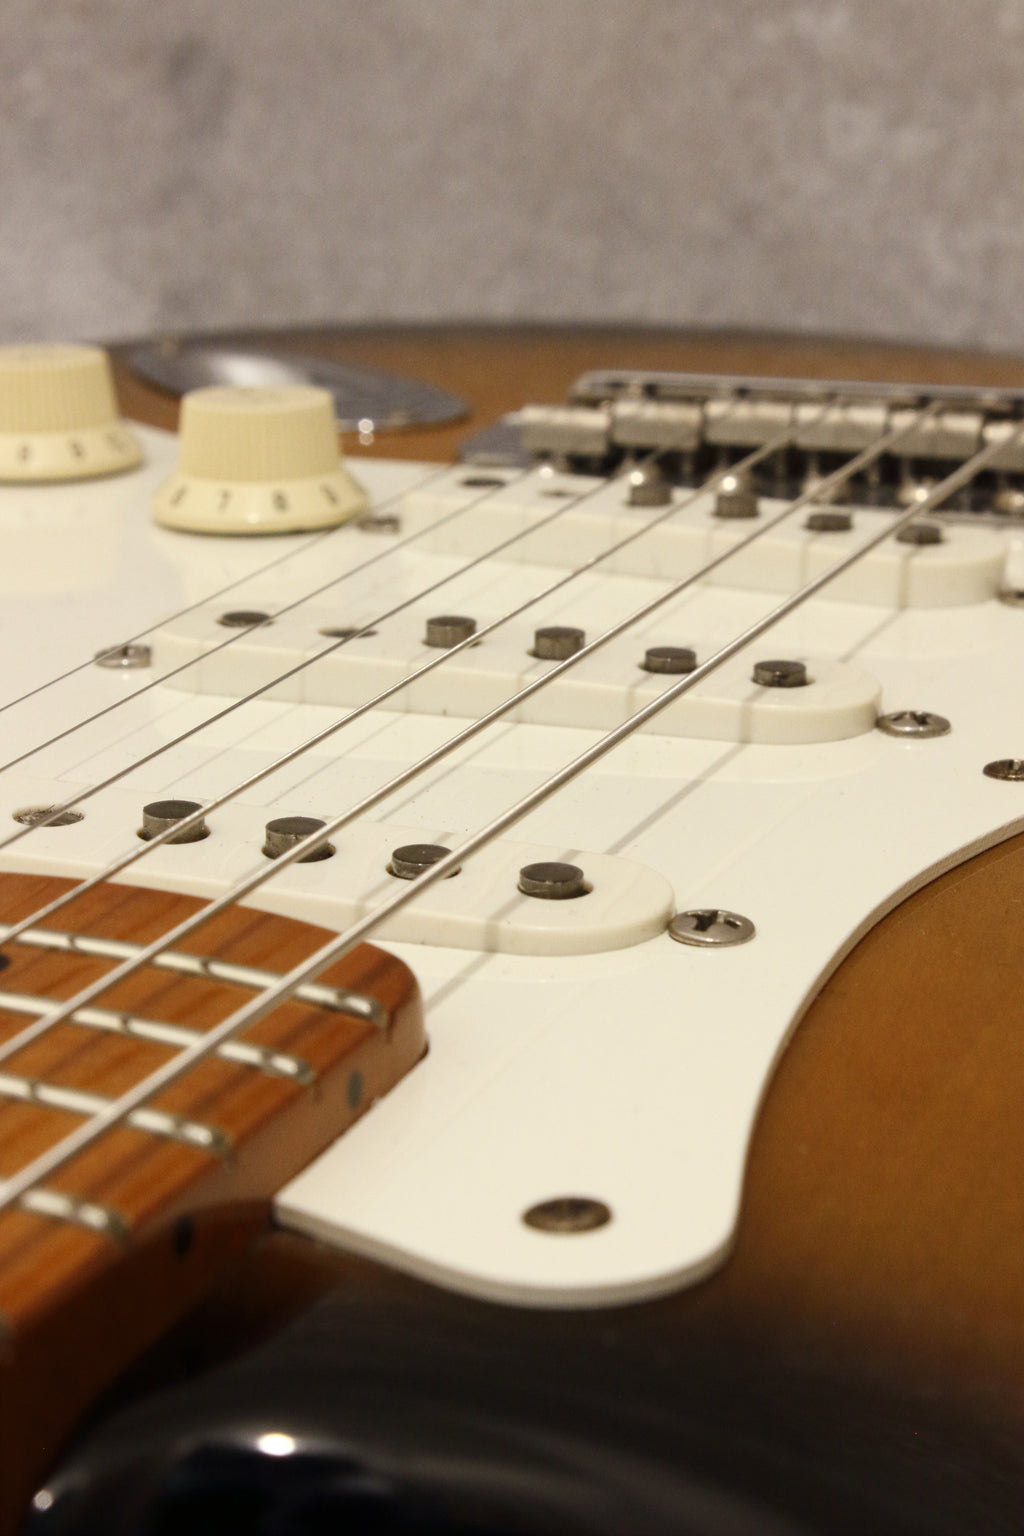 Fender American Vintage '57 Stratocaster Sunburst 1996